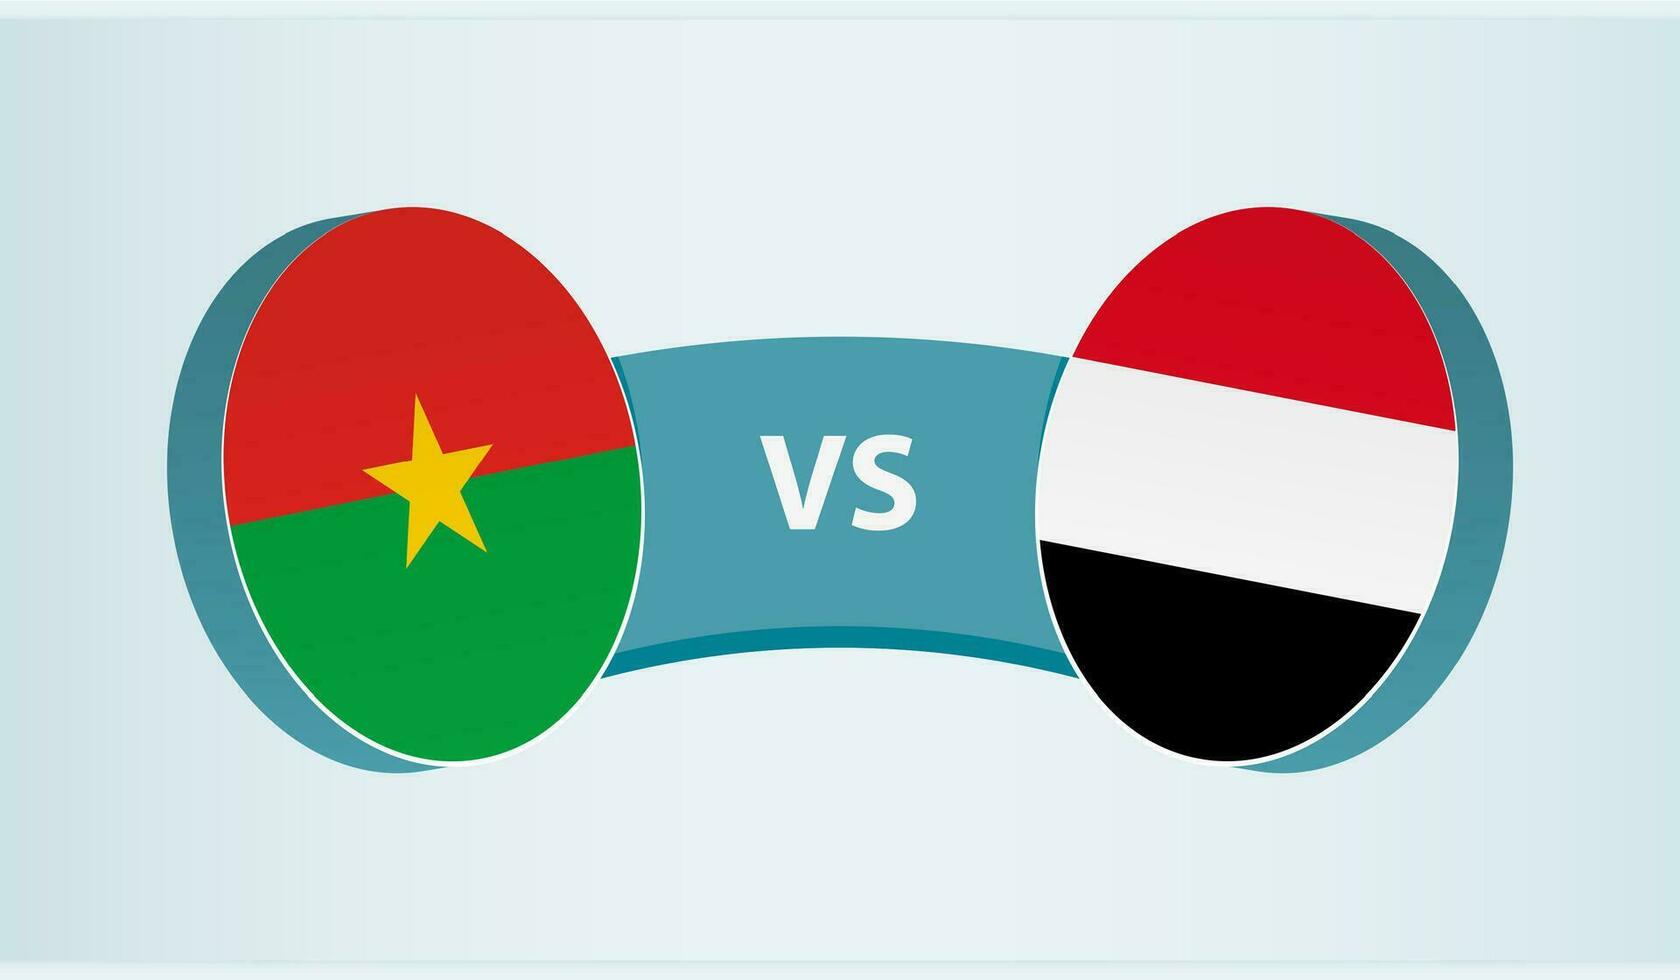 Burkina faso mot Jemen, team sporter konkurrens begrepp. vektor